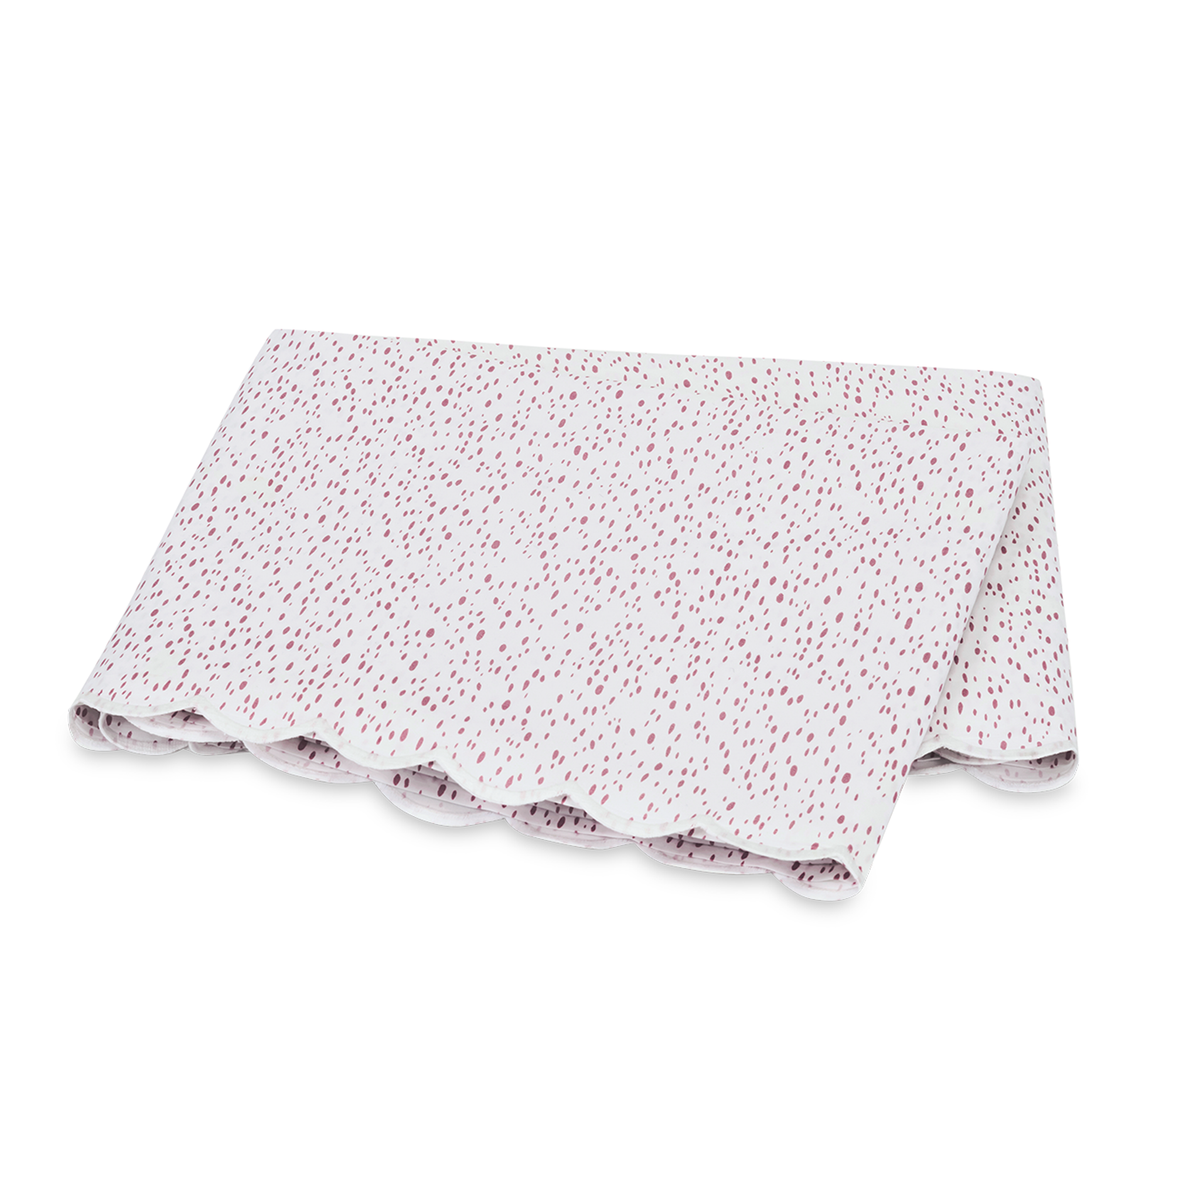 Flat Sheet of Matouk Celine Bedding in Pink Color